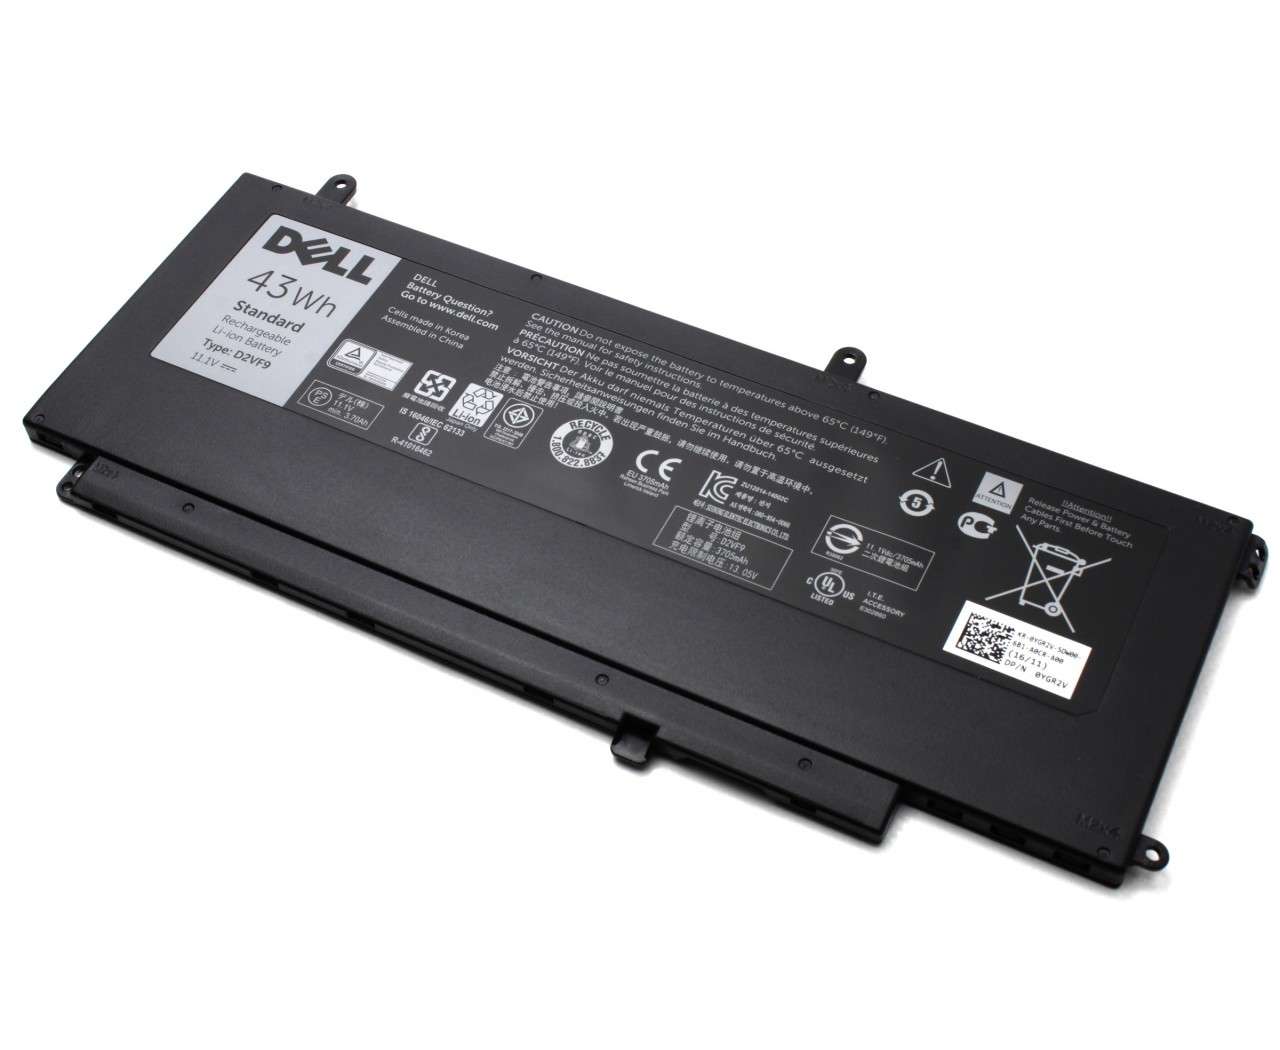 Baterie Dell PXR51 Originala 43Wh imagine powerlaptop.ro 2021